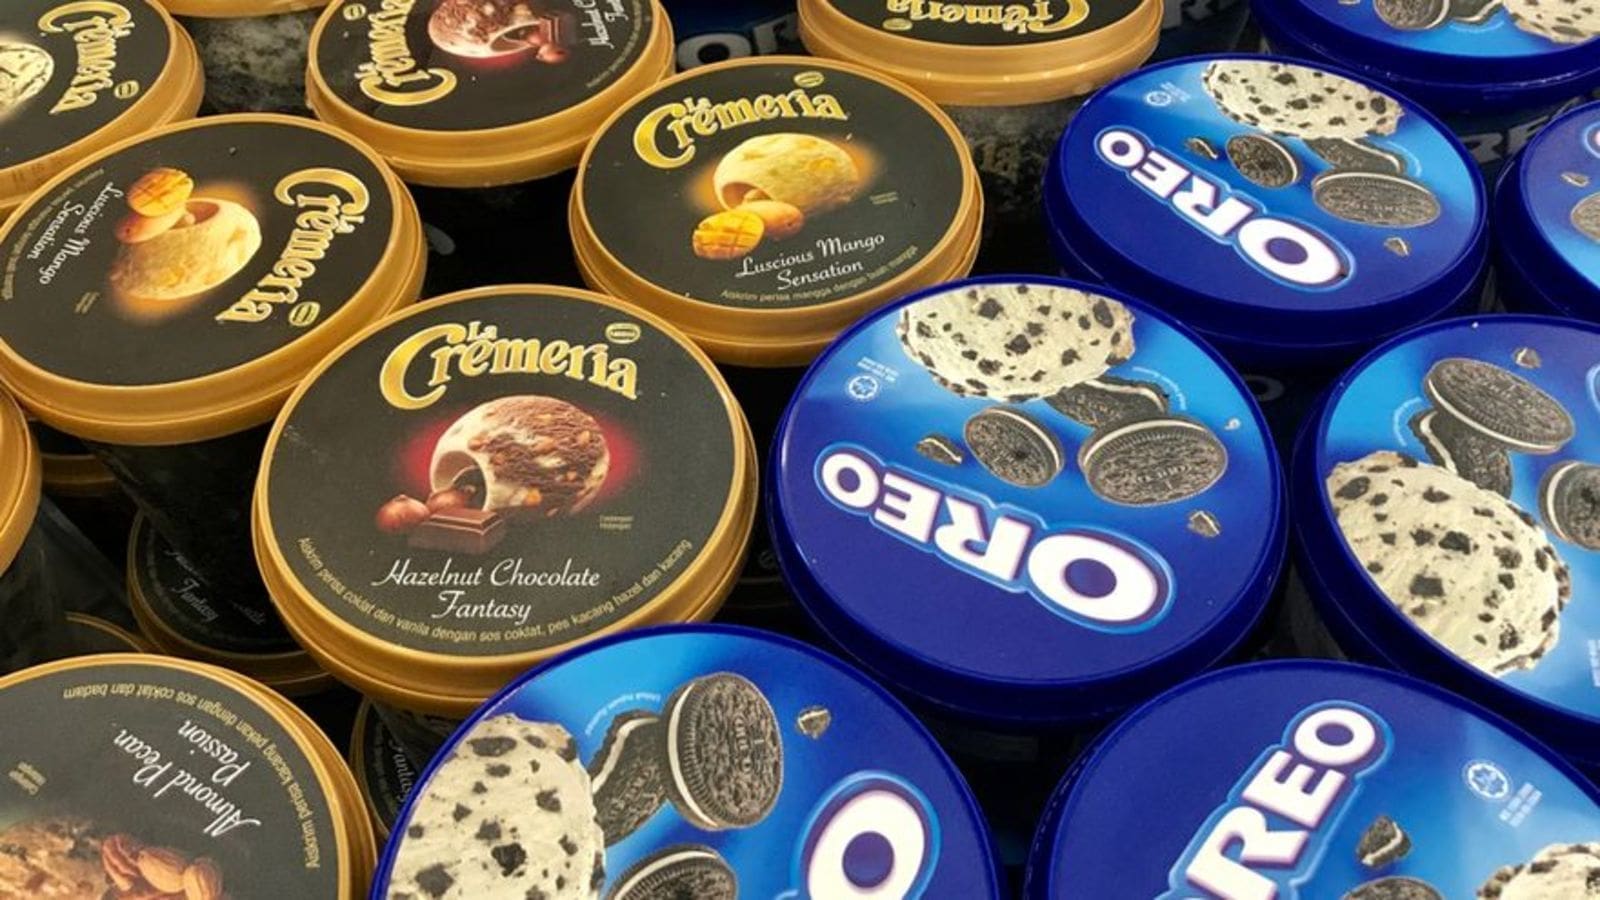 Mars, Nestle recall several ice cream batches thanks to Ethylene Oxide contamination